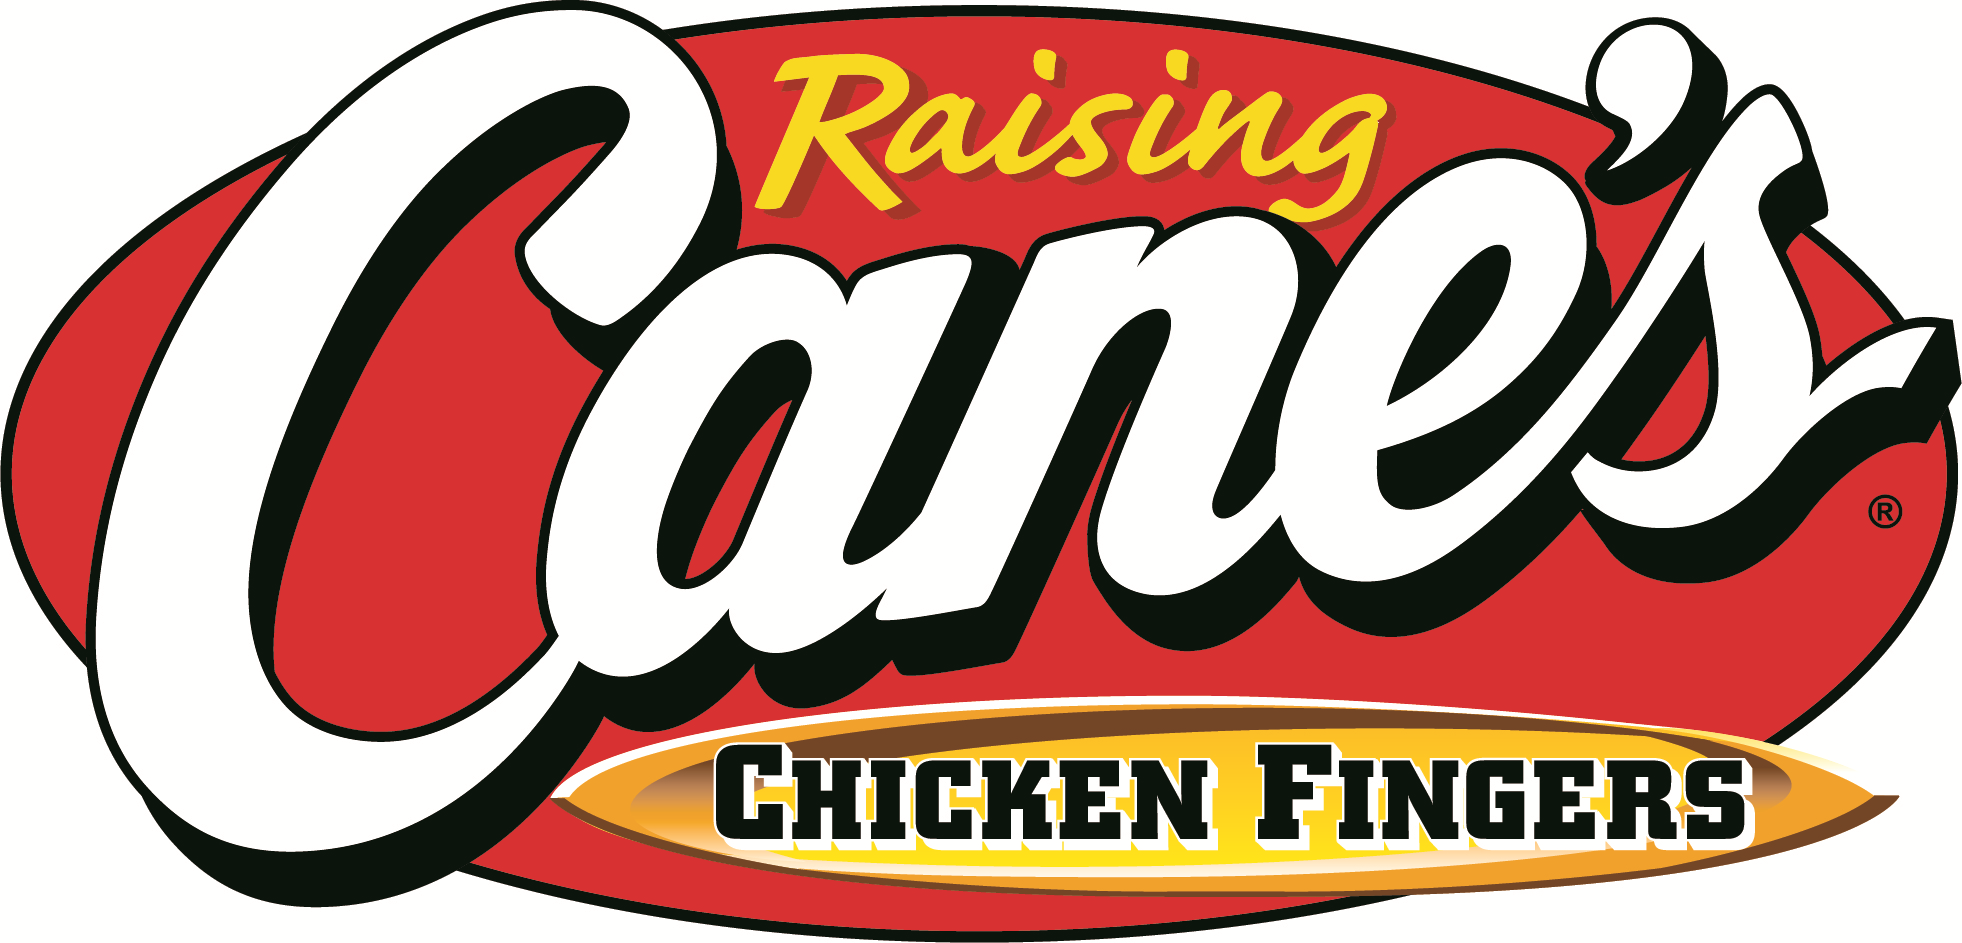 Raising Canes Company Logo